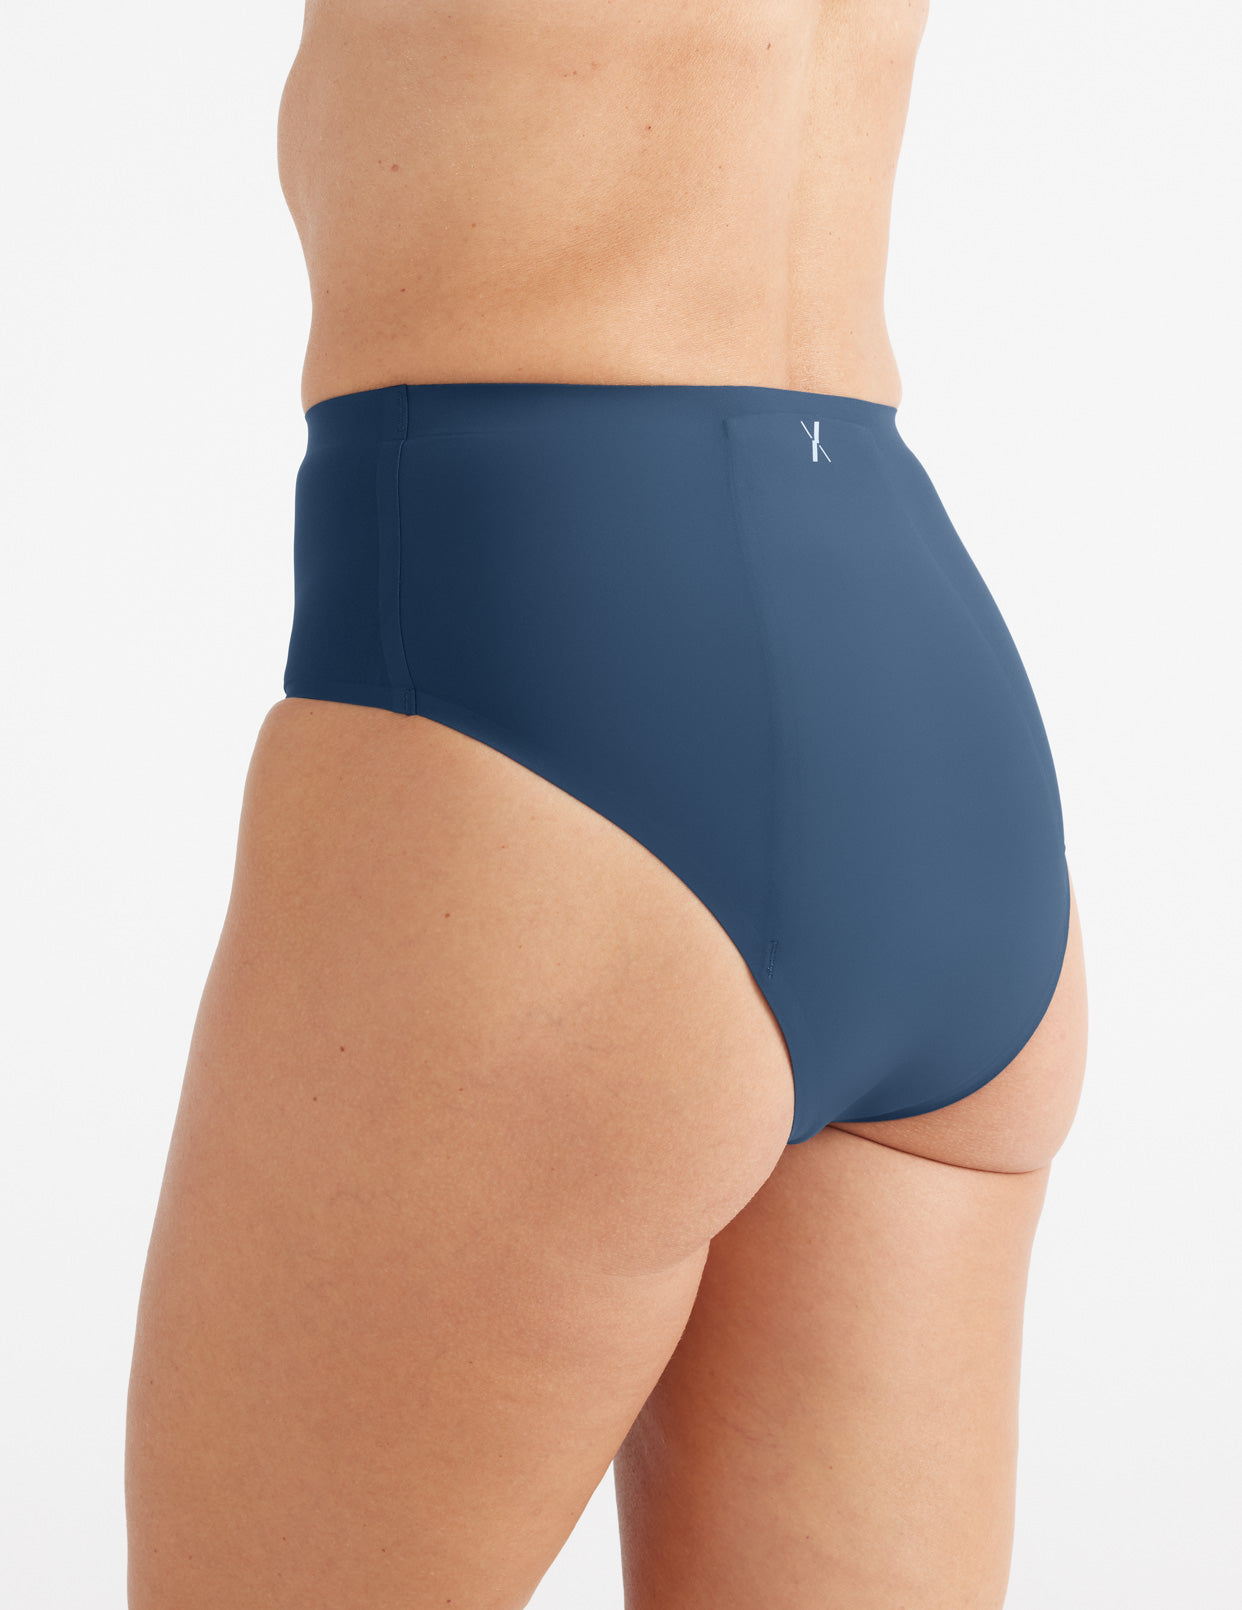 XZHGS Graphic Prints Winter underwear Packs Slip Shorts for under